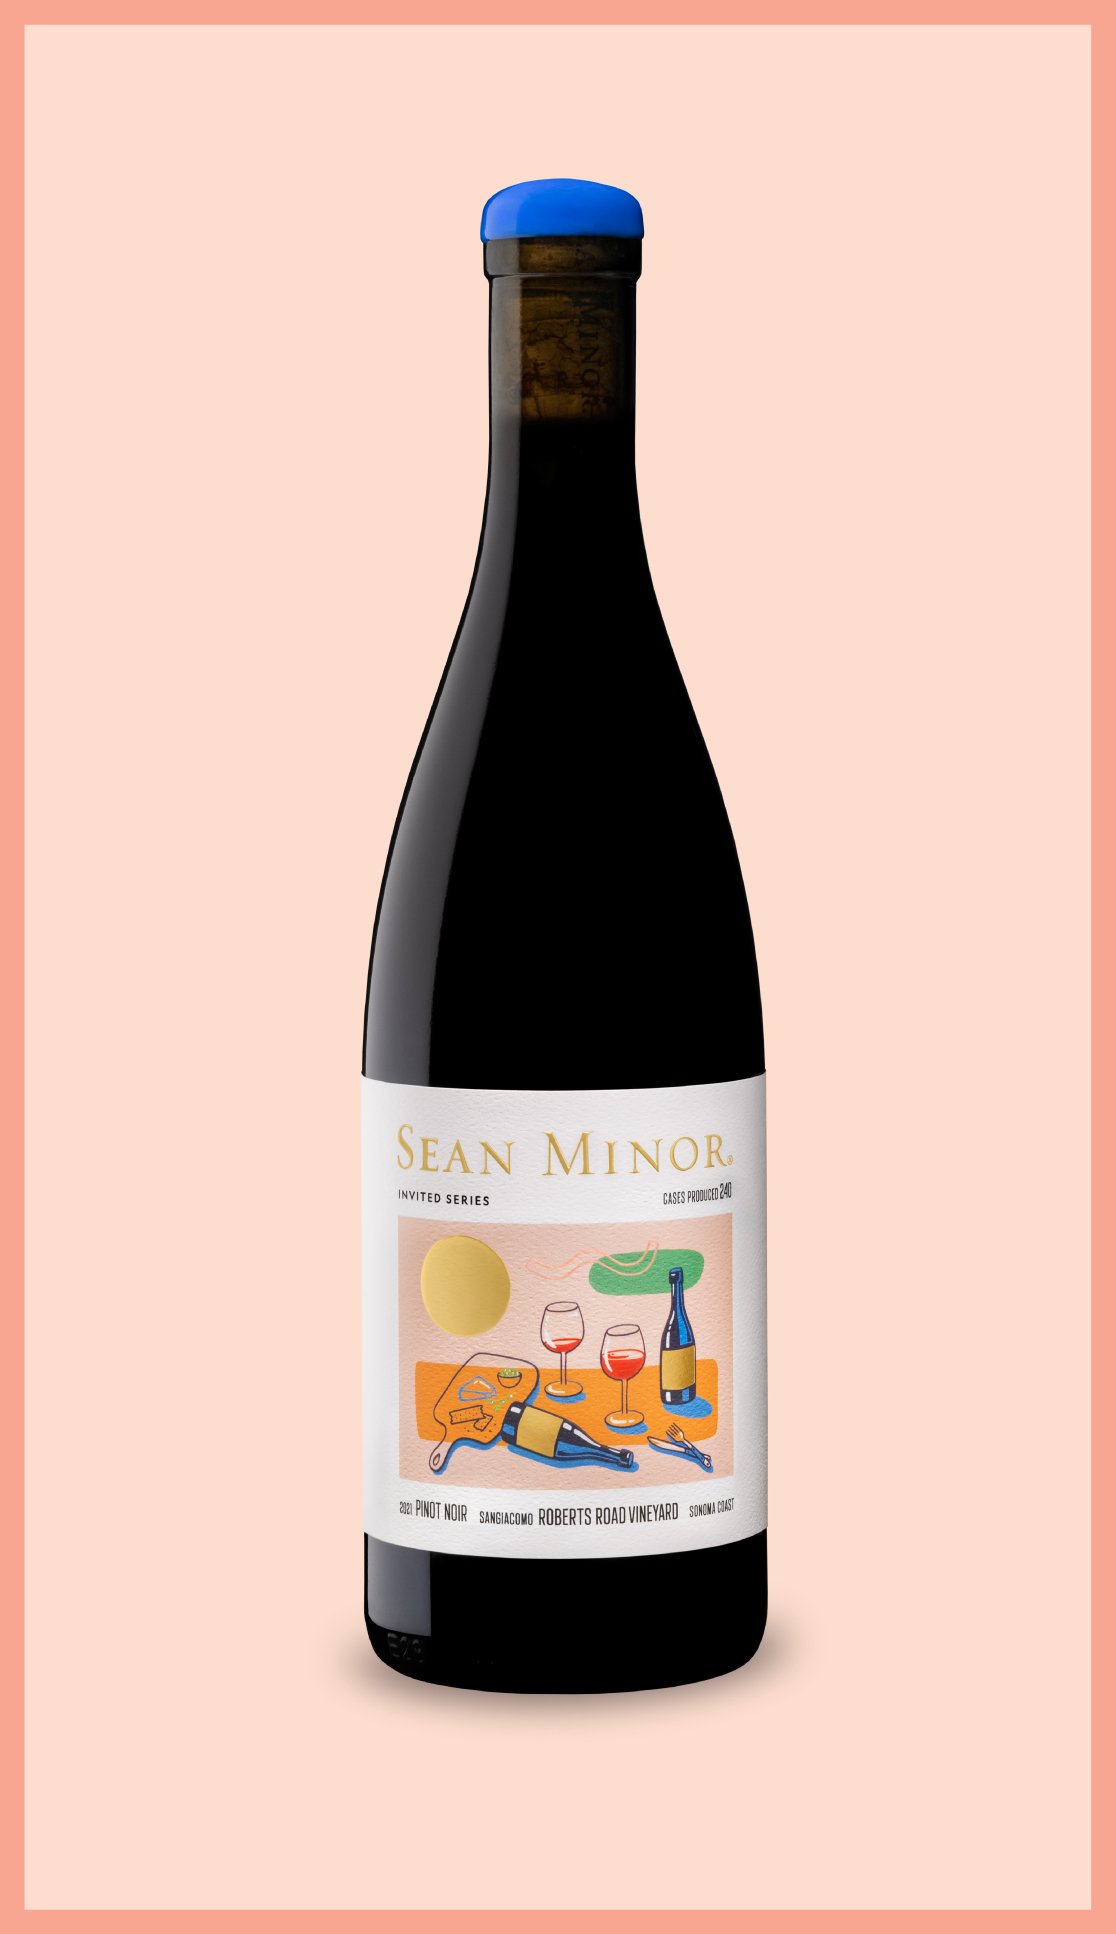  Sean Minor Wines